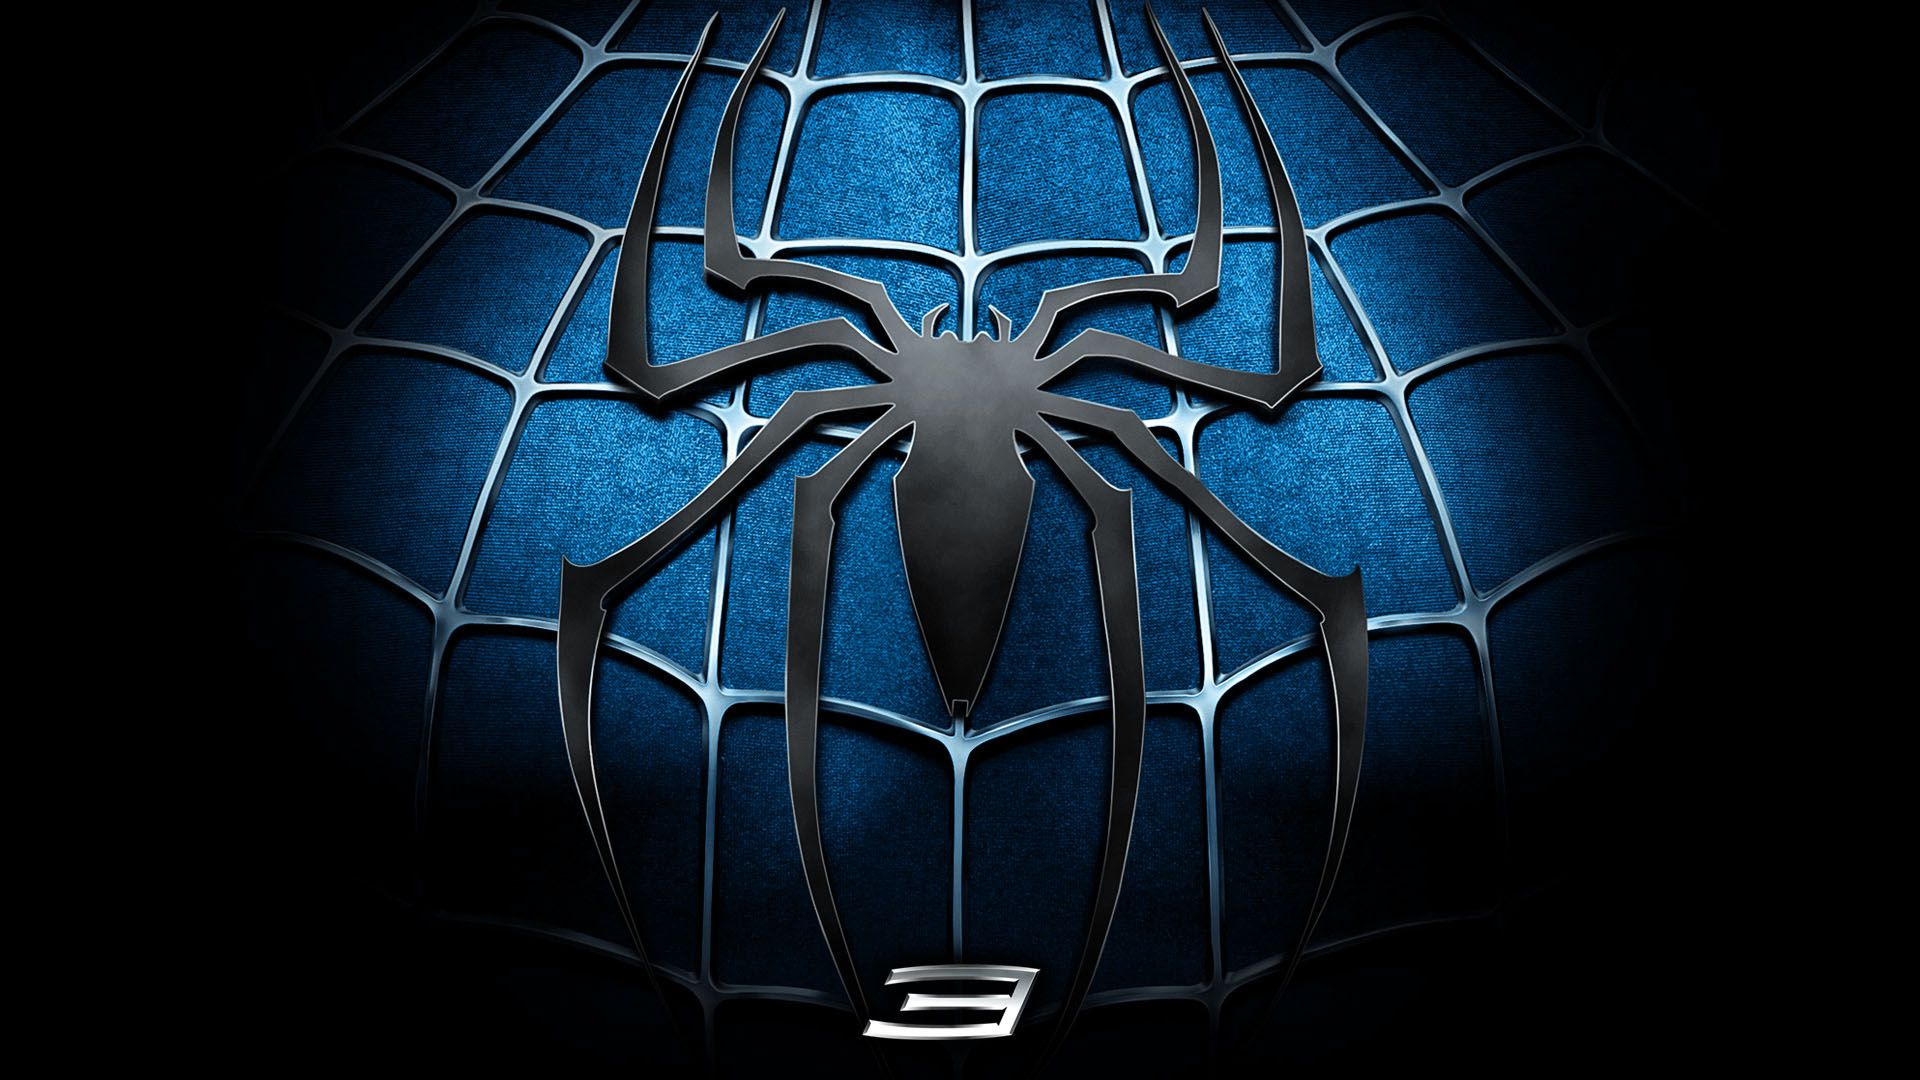 Black Spiderman Iphone Wallpapers HD | PixelsTalk.Net